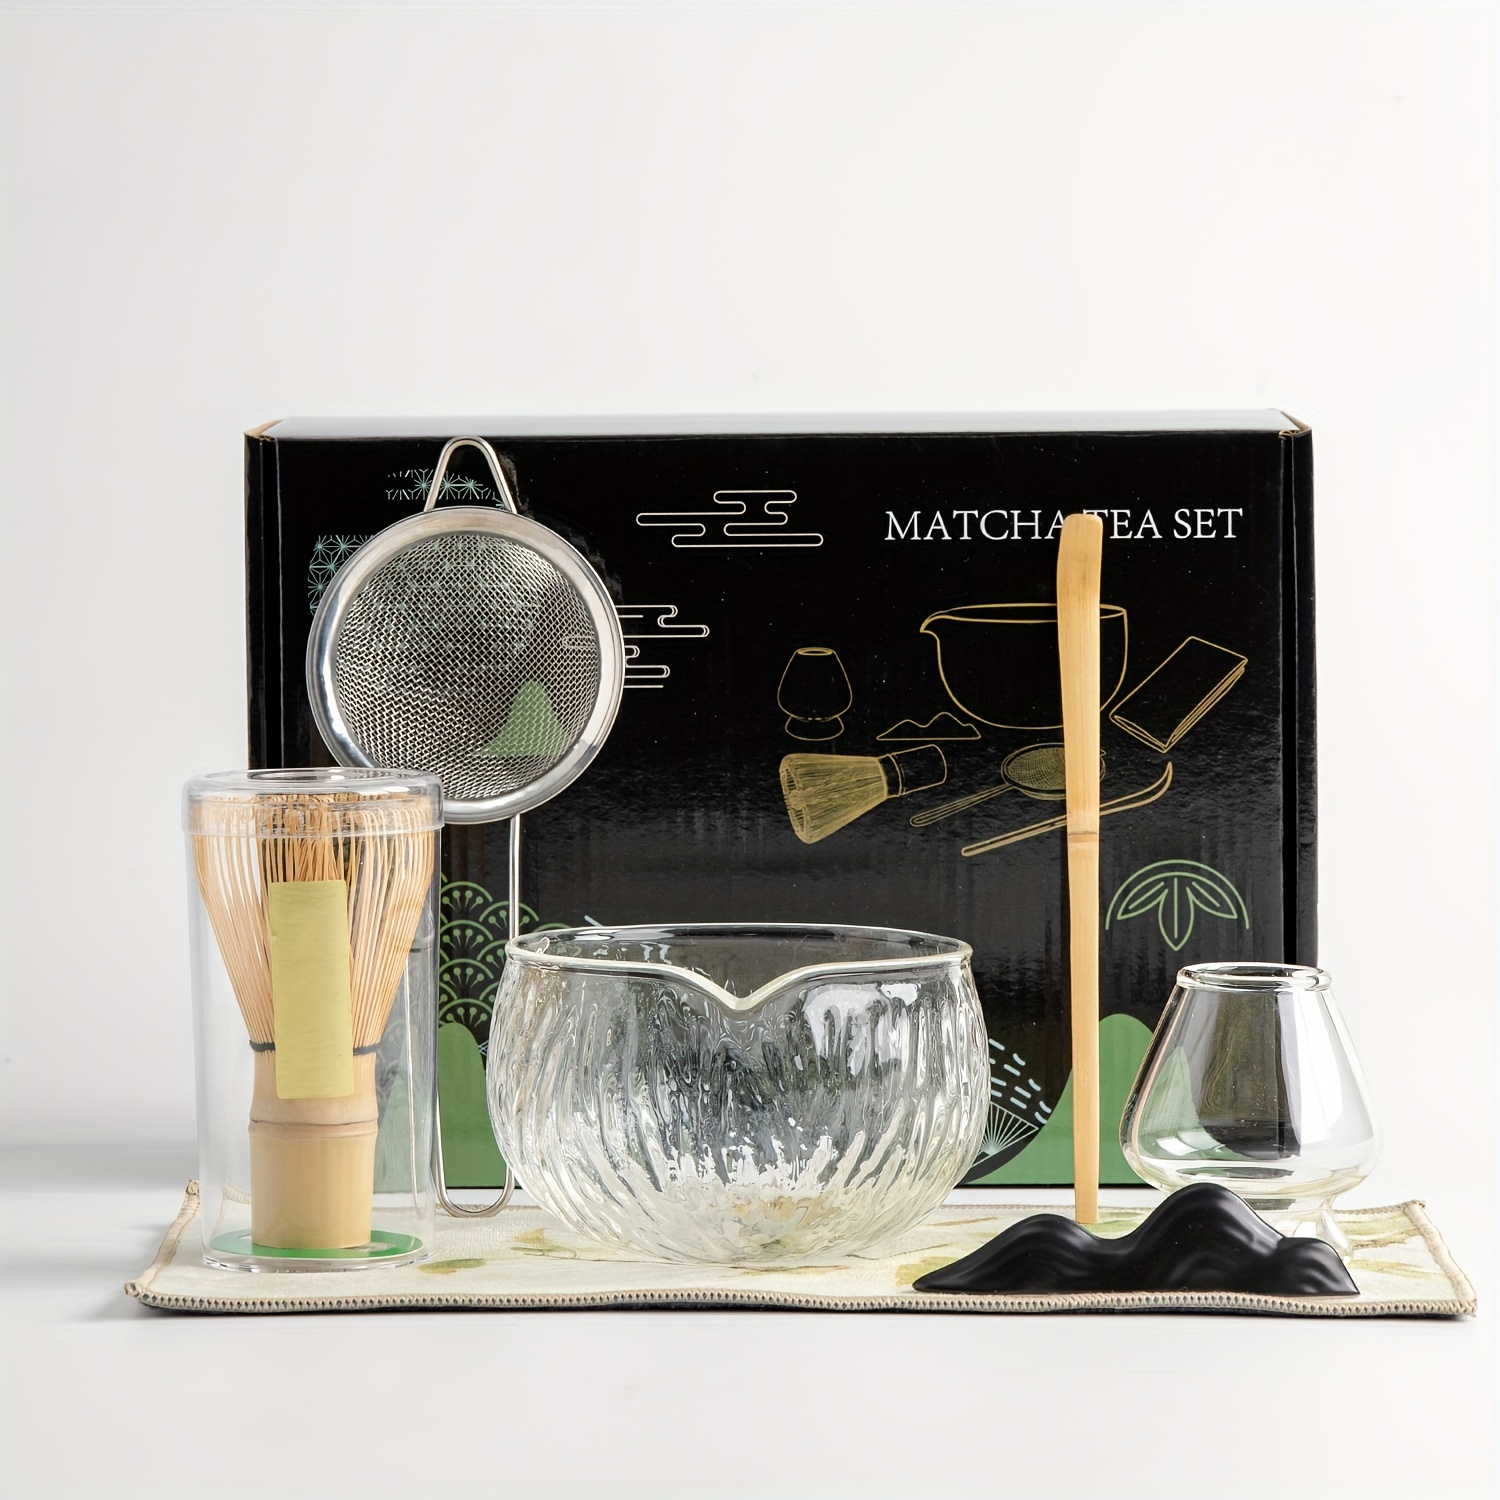 Herramienta Matcha, juego de herramientas para té Matcha, kit de